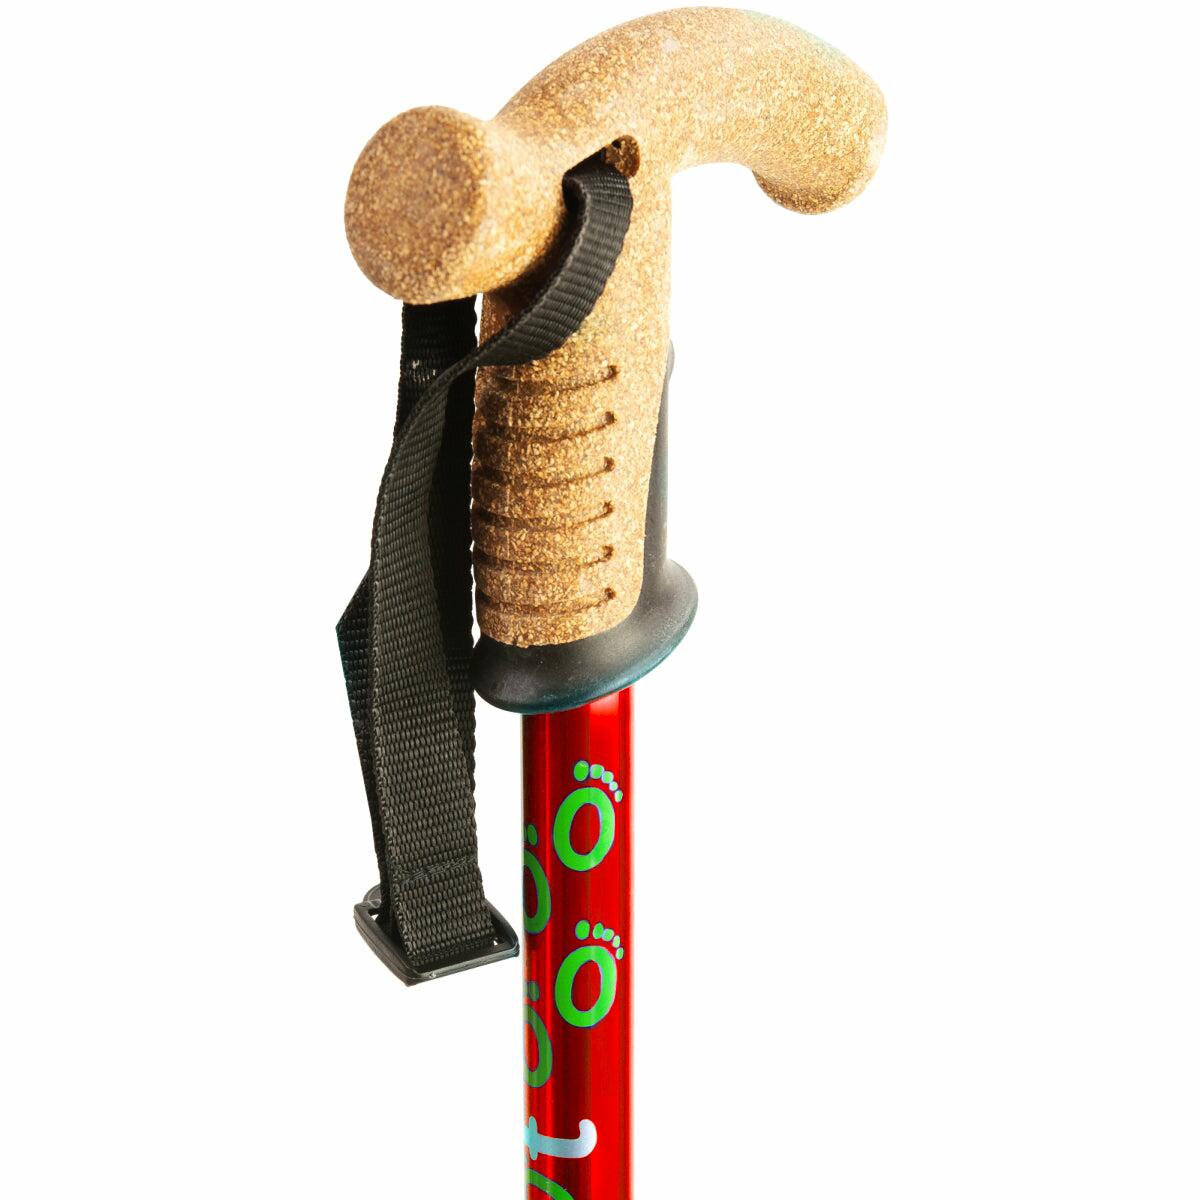 The cork handle of a red Flexyfoot Premium Cork Handle Folding Walking Stick